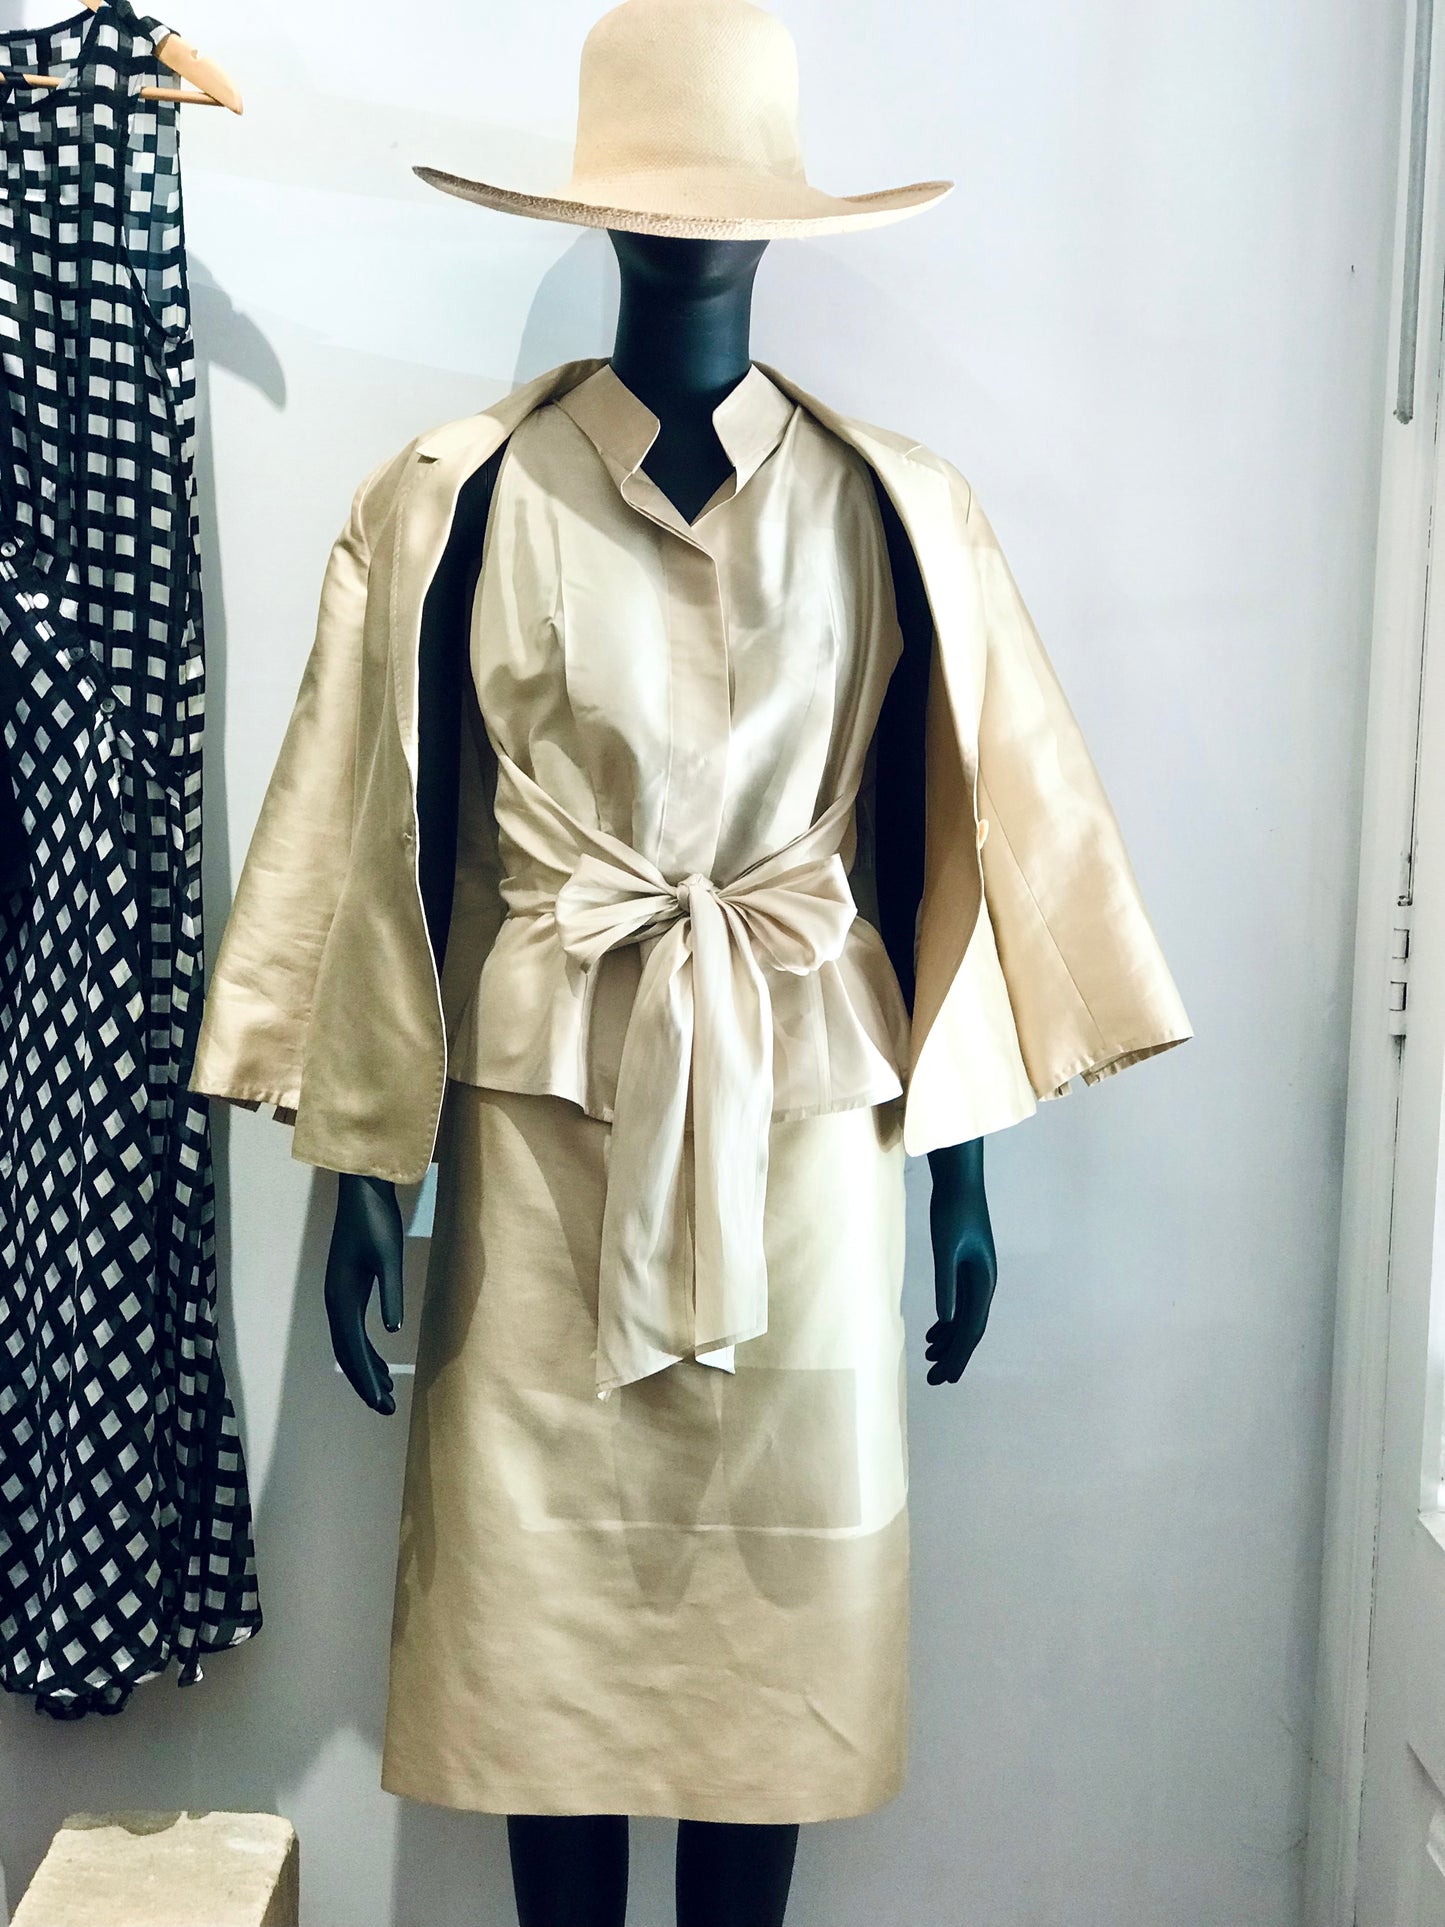 Max Mara Gold Silk/Cotton Jacket & Skirt Set Up